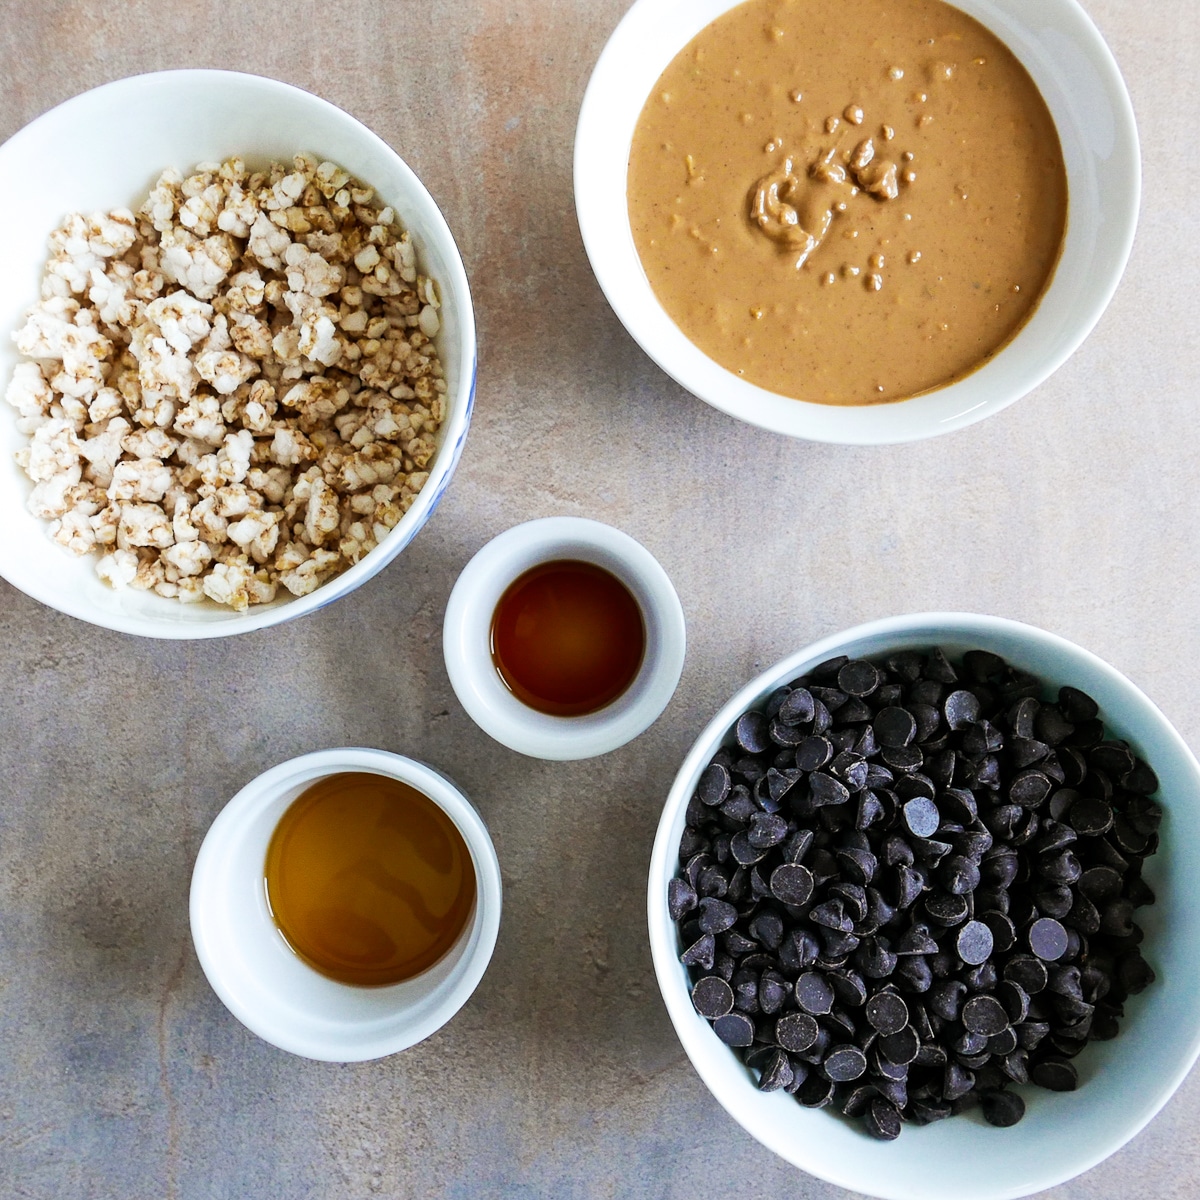 ingredients arranged in bowls.